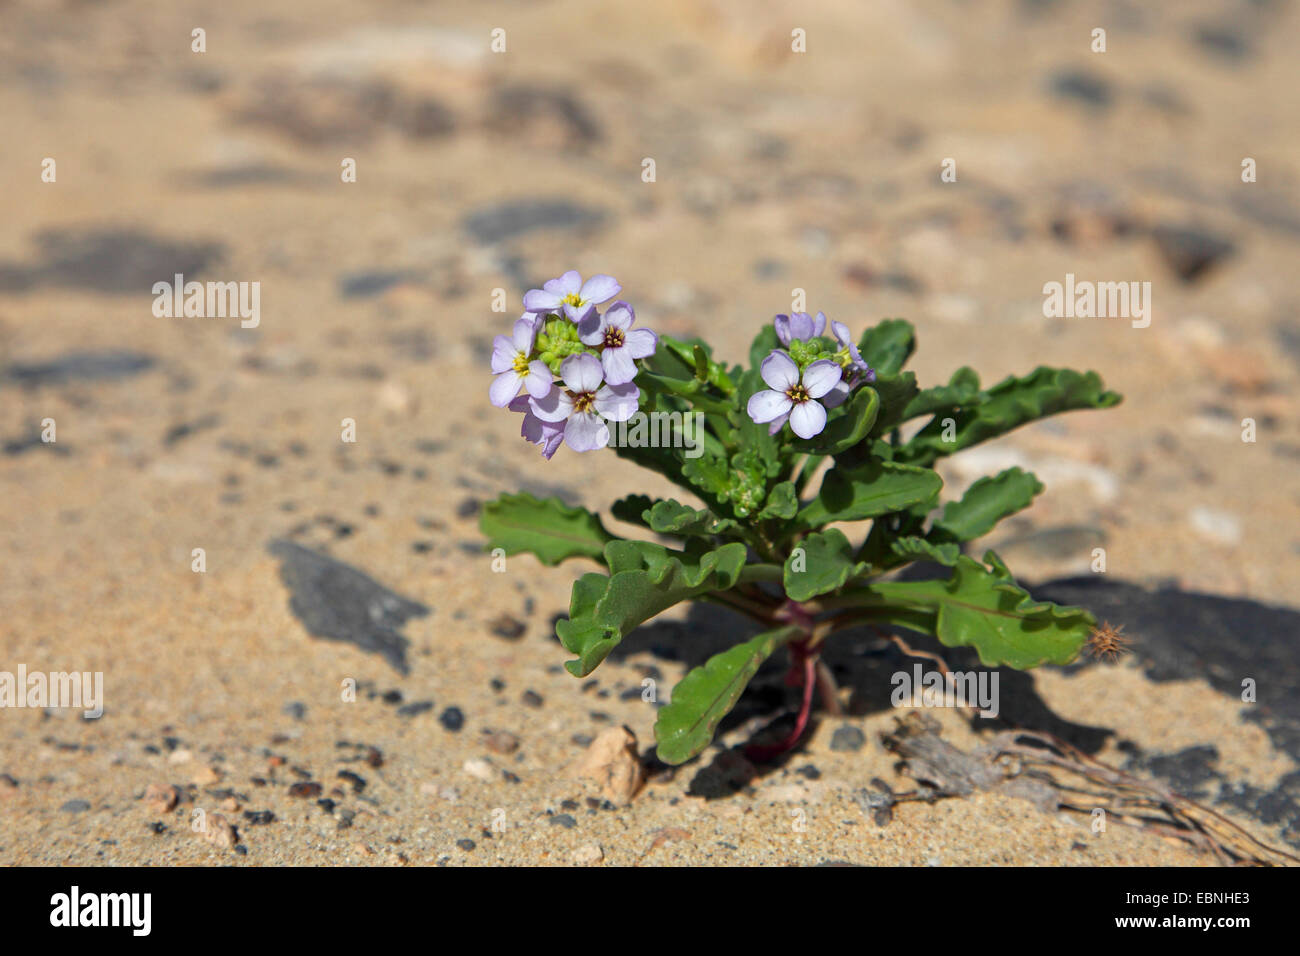 European searocket, sea rocket (Cakile maritima), flowering plant grows in the sand, Canary Islands, Fuerteventura Stock Photo